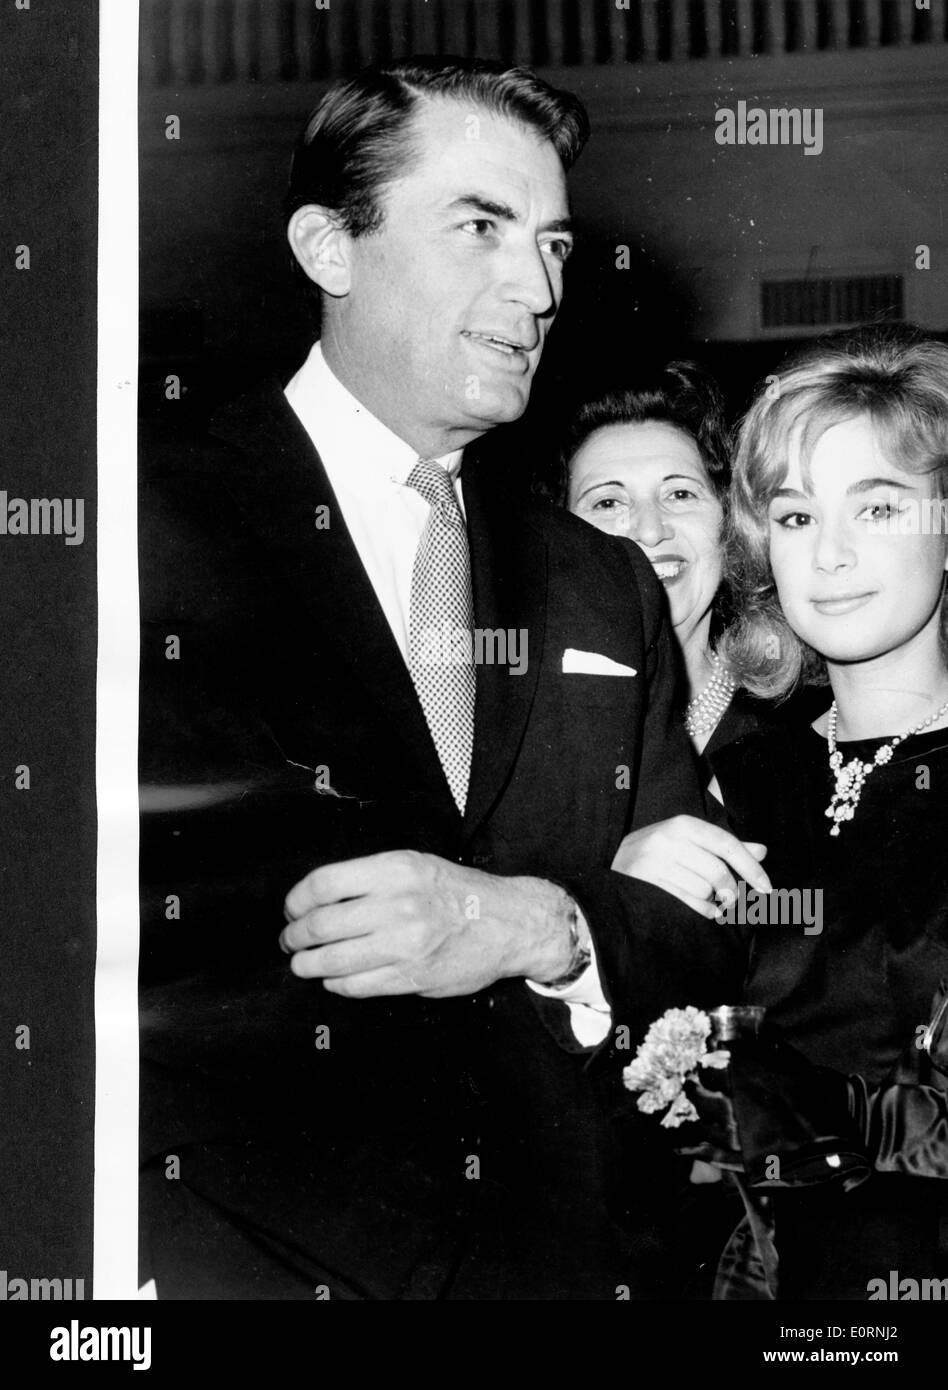 Actor Gregory Peck escorting Aliki Vougioklaki at the King's Palace Hotel Stock Photo